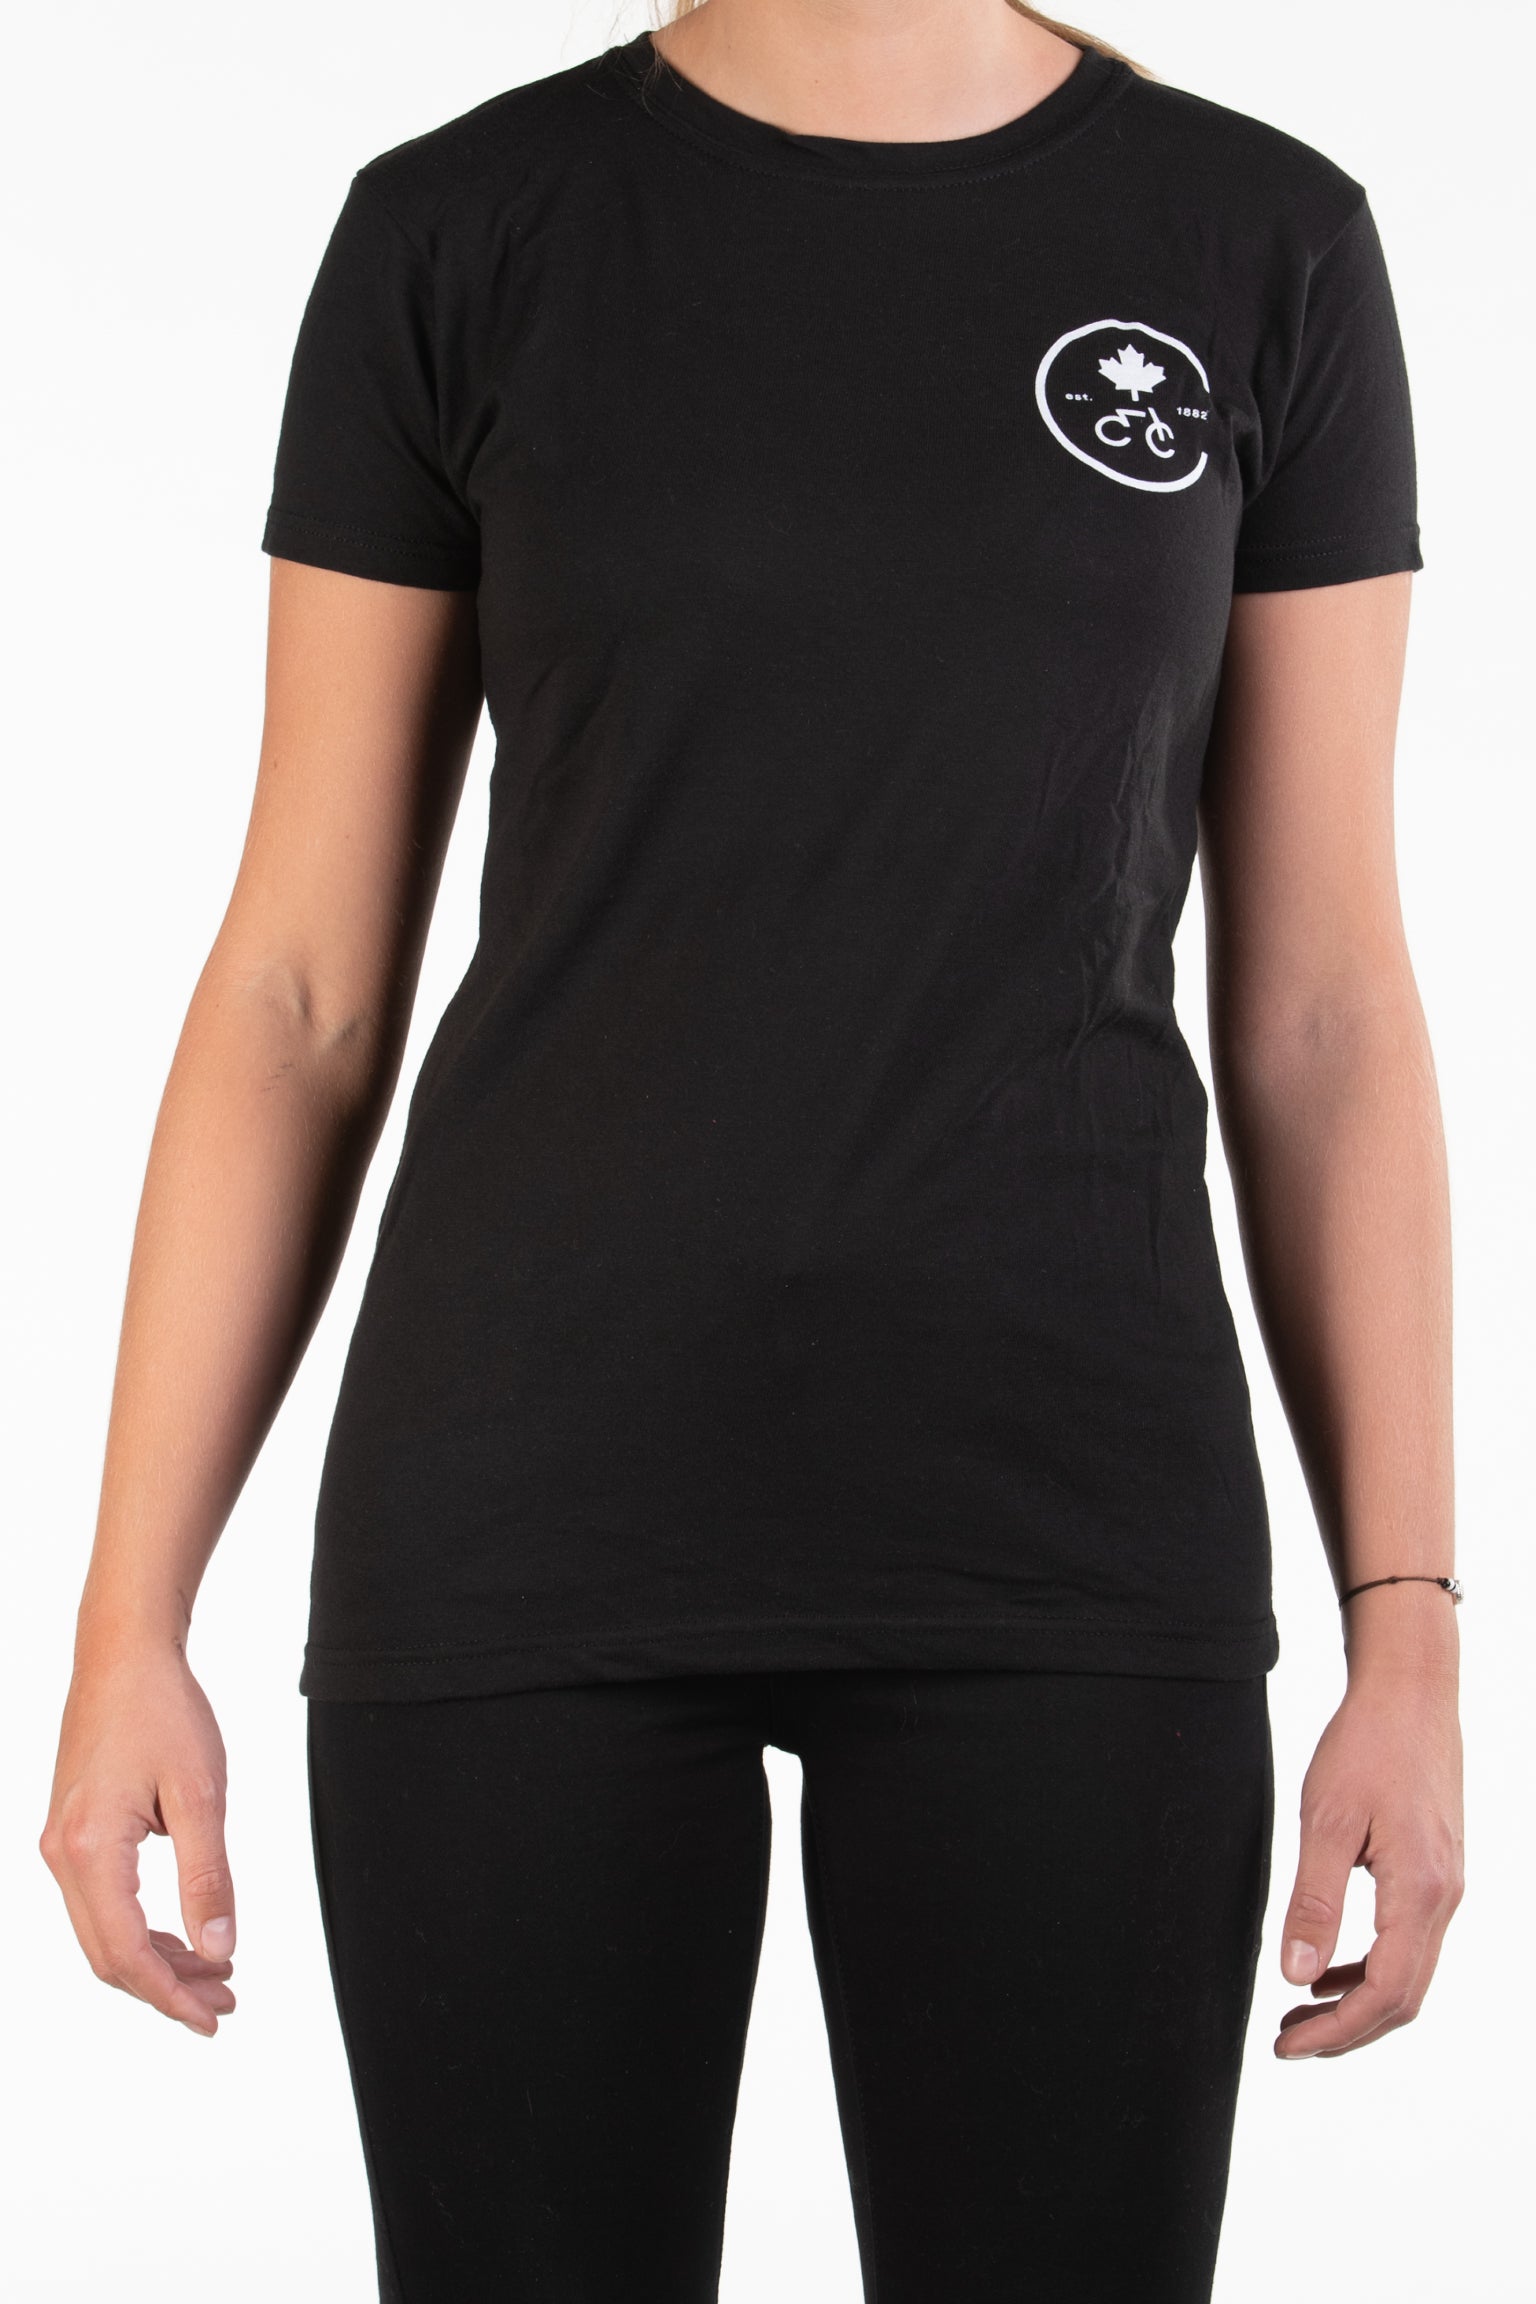 Black Cycling Canada T-Shirt - Left-Hand Logo